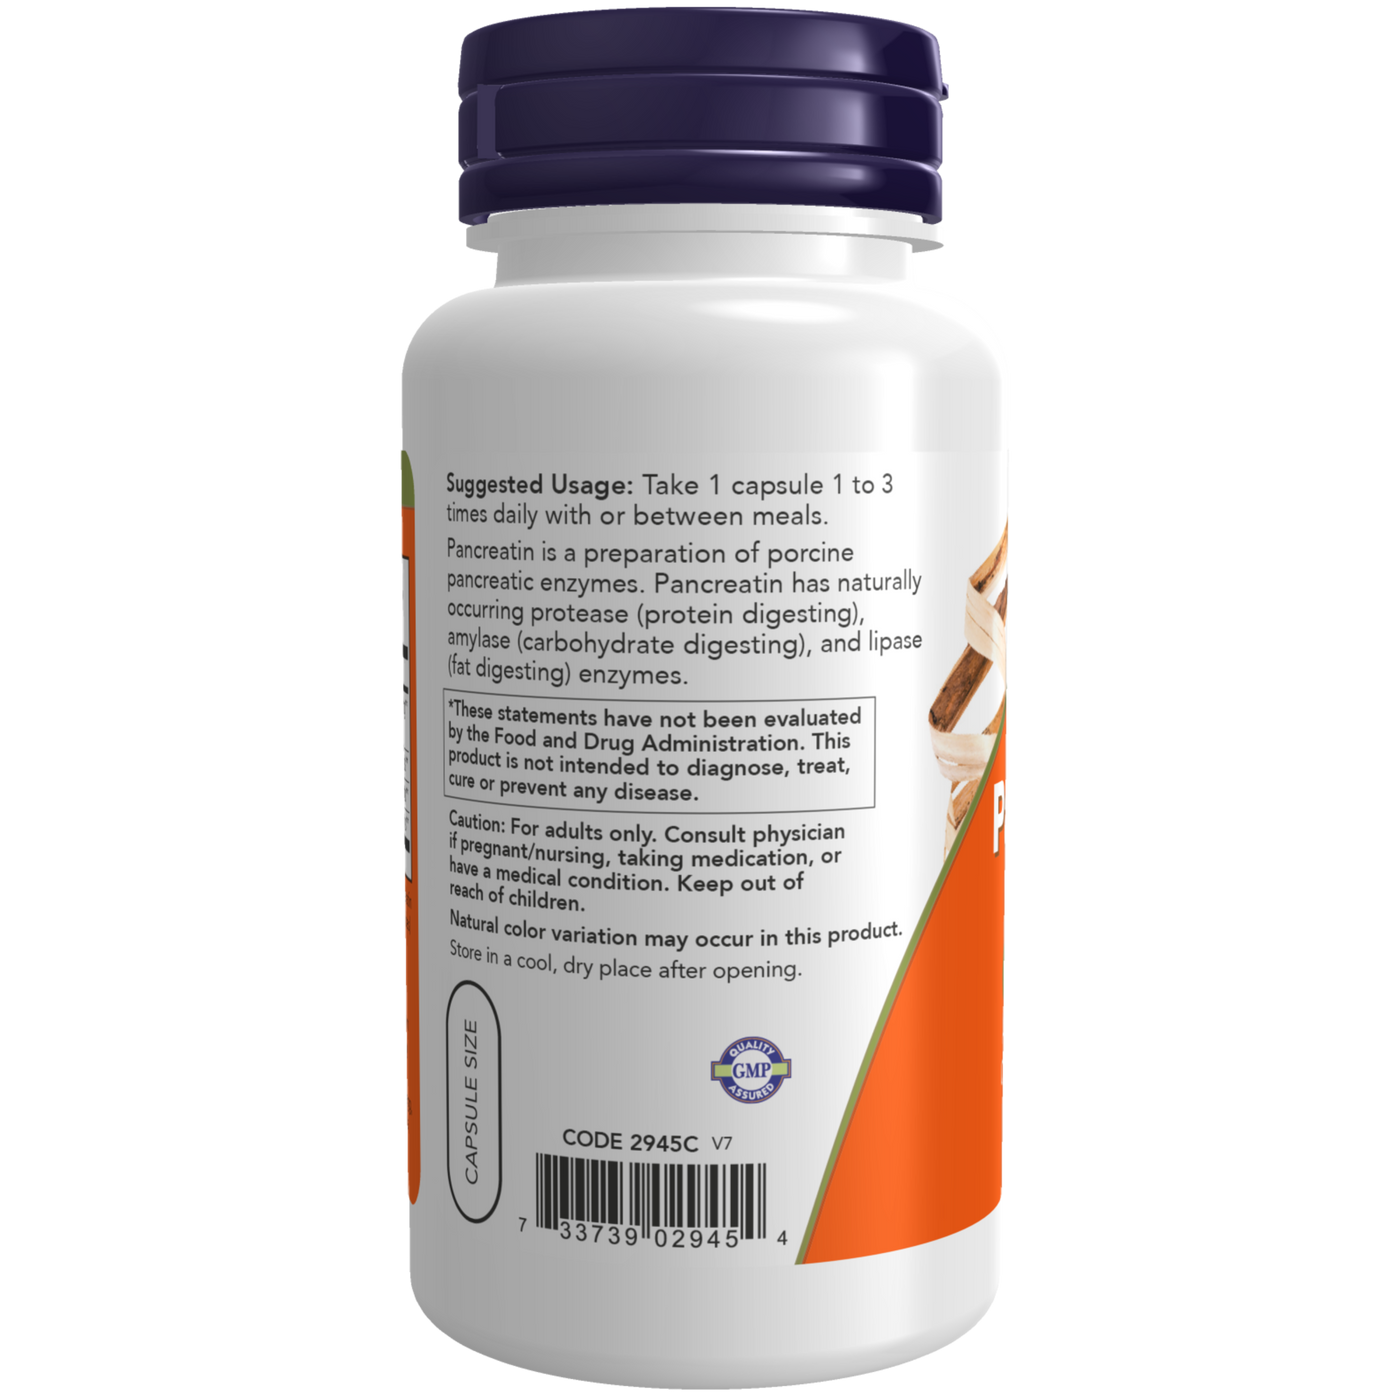 Pancreatin 10X-200 mg  Curated Wellness